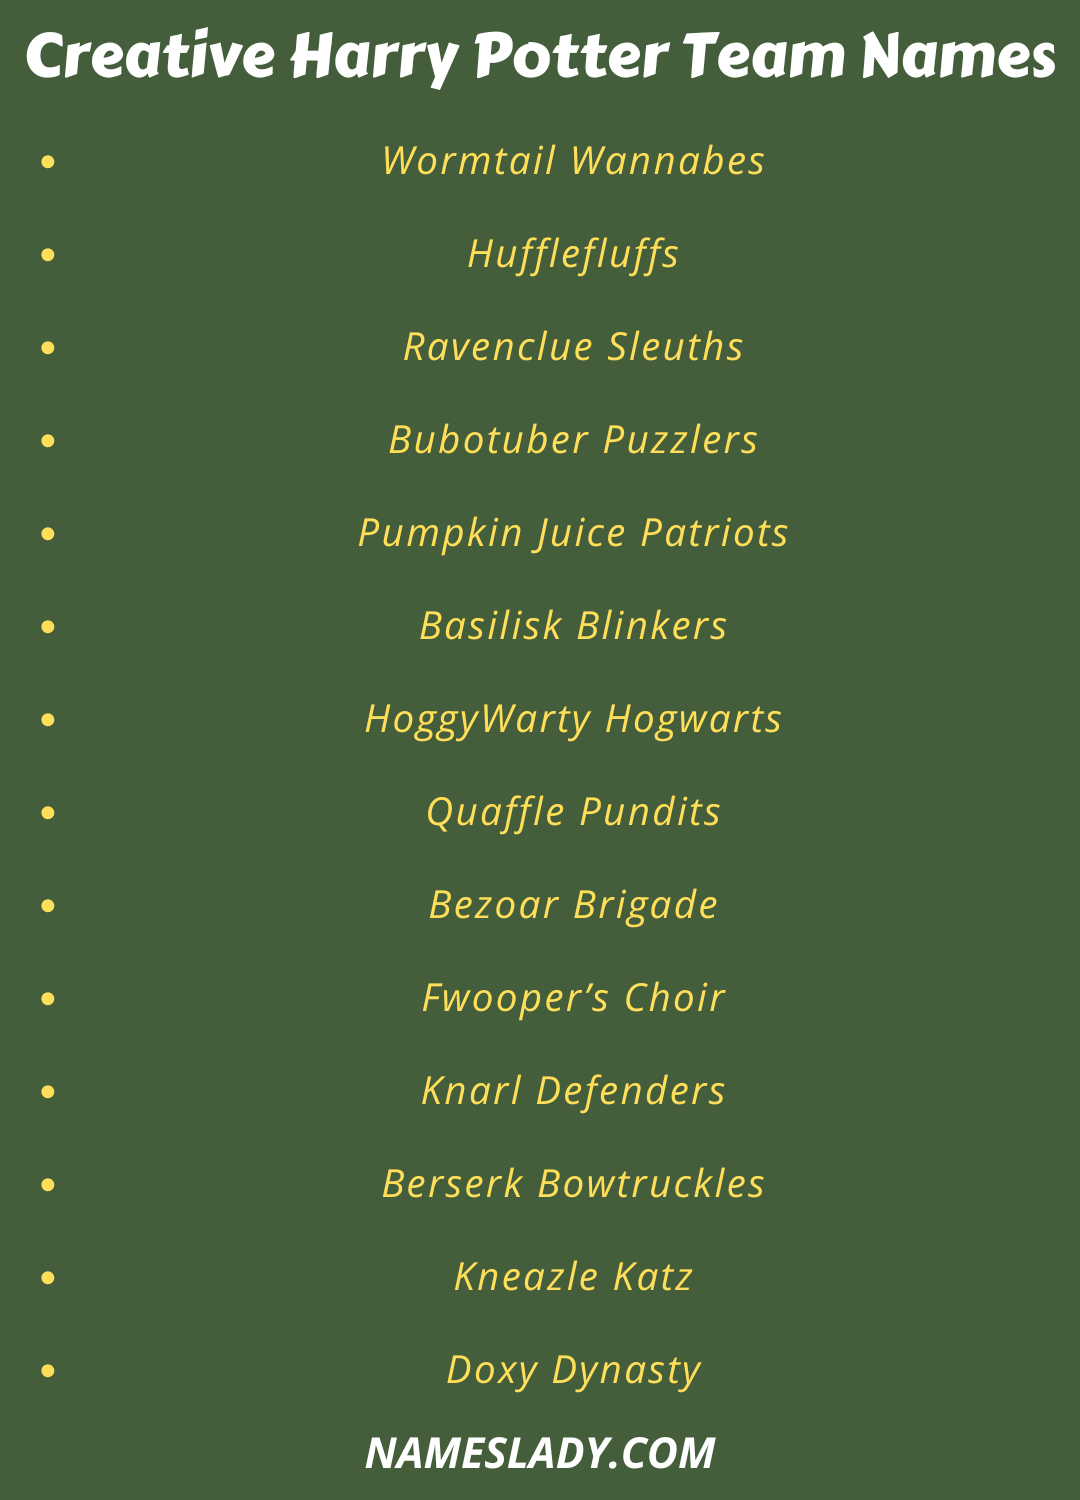 Creative Harry Potter Team Names